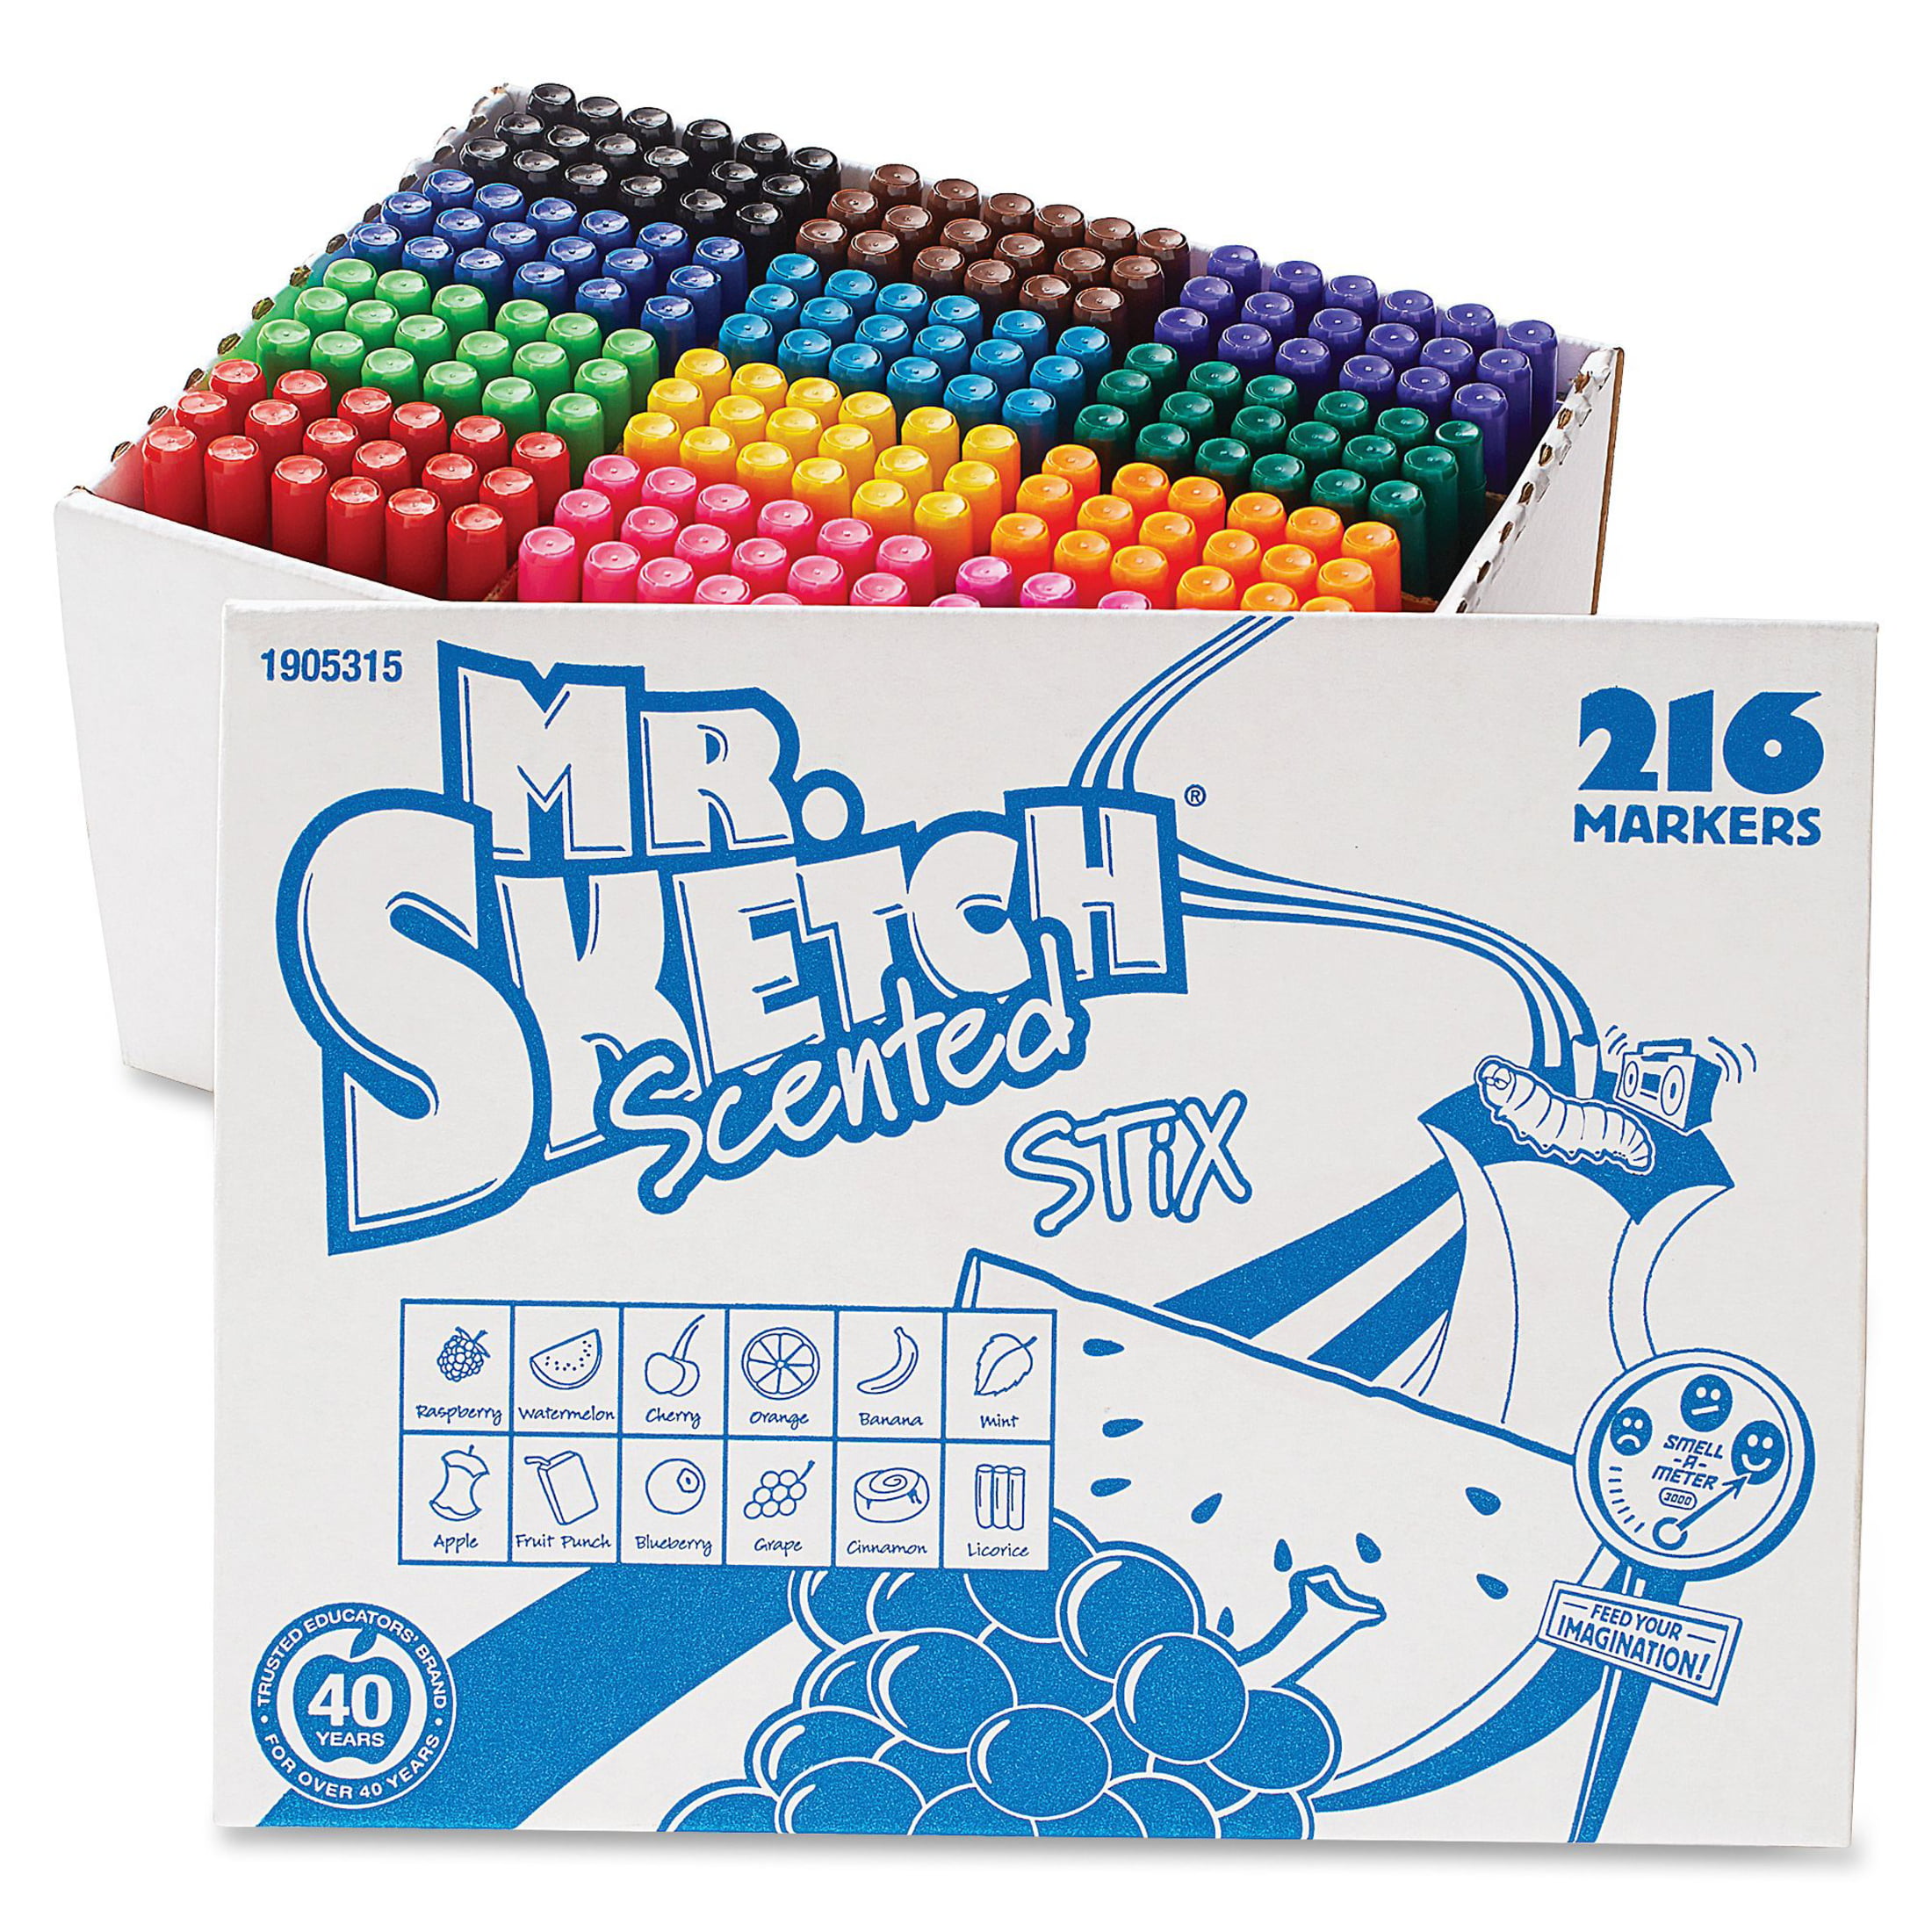 Nostalgia smells like grape-scented markers: Mr. Sketch is back